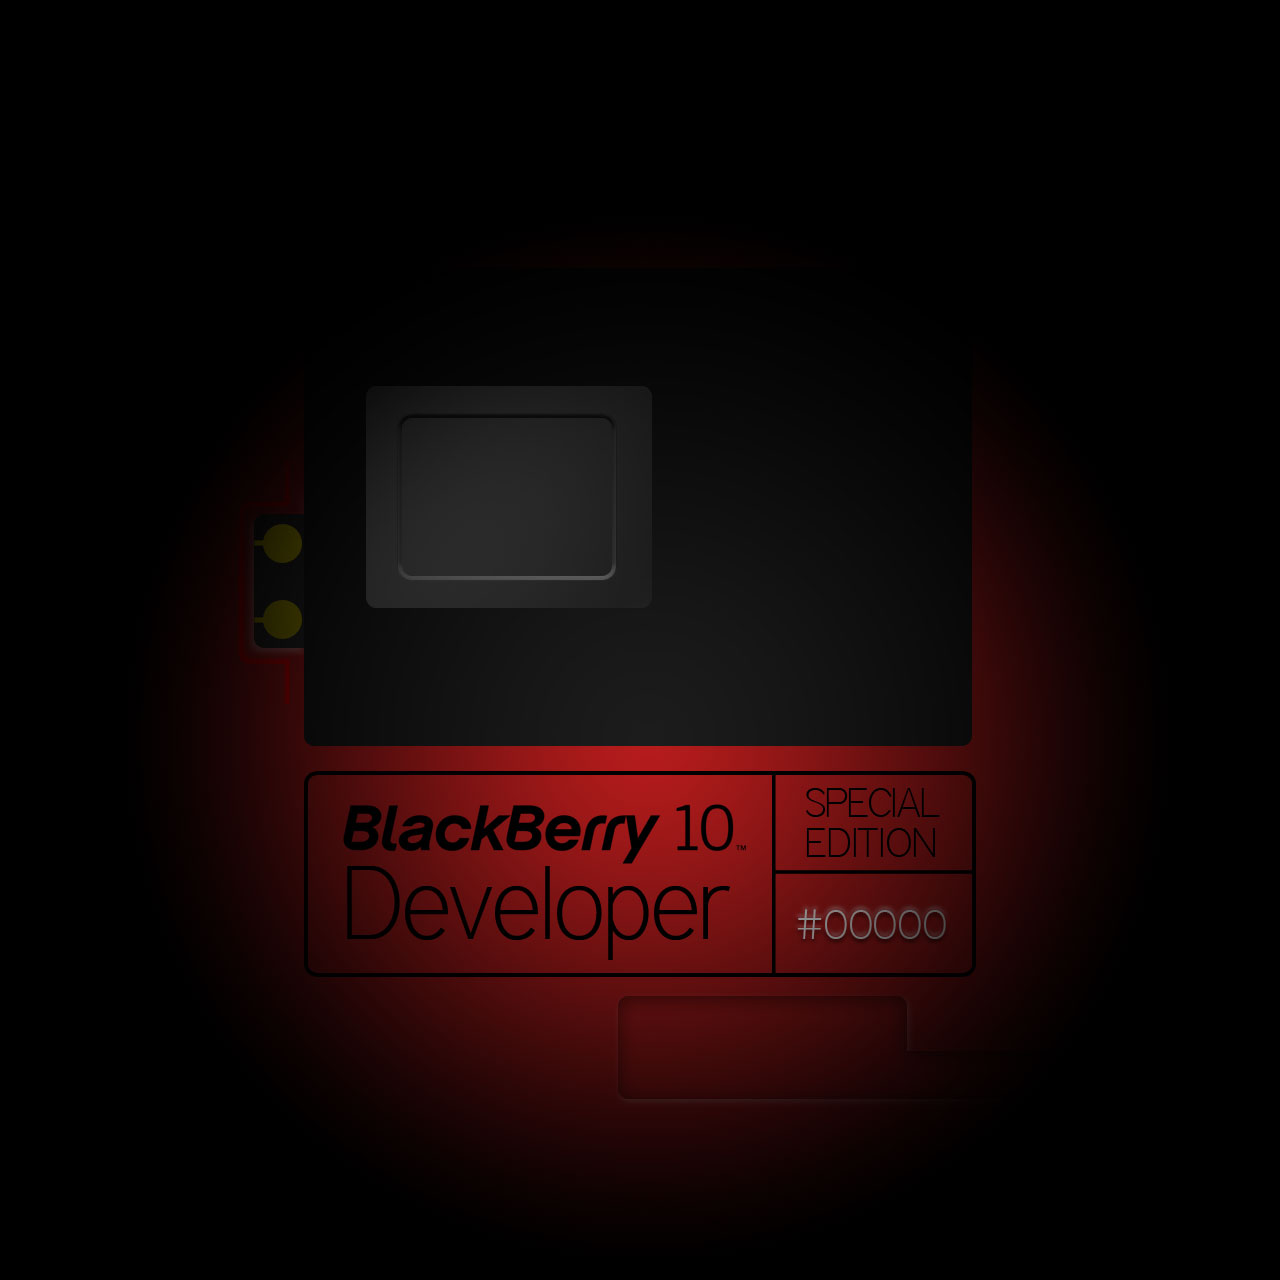 Wallpaper Blackberry Q10